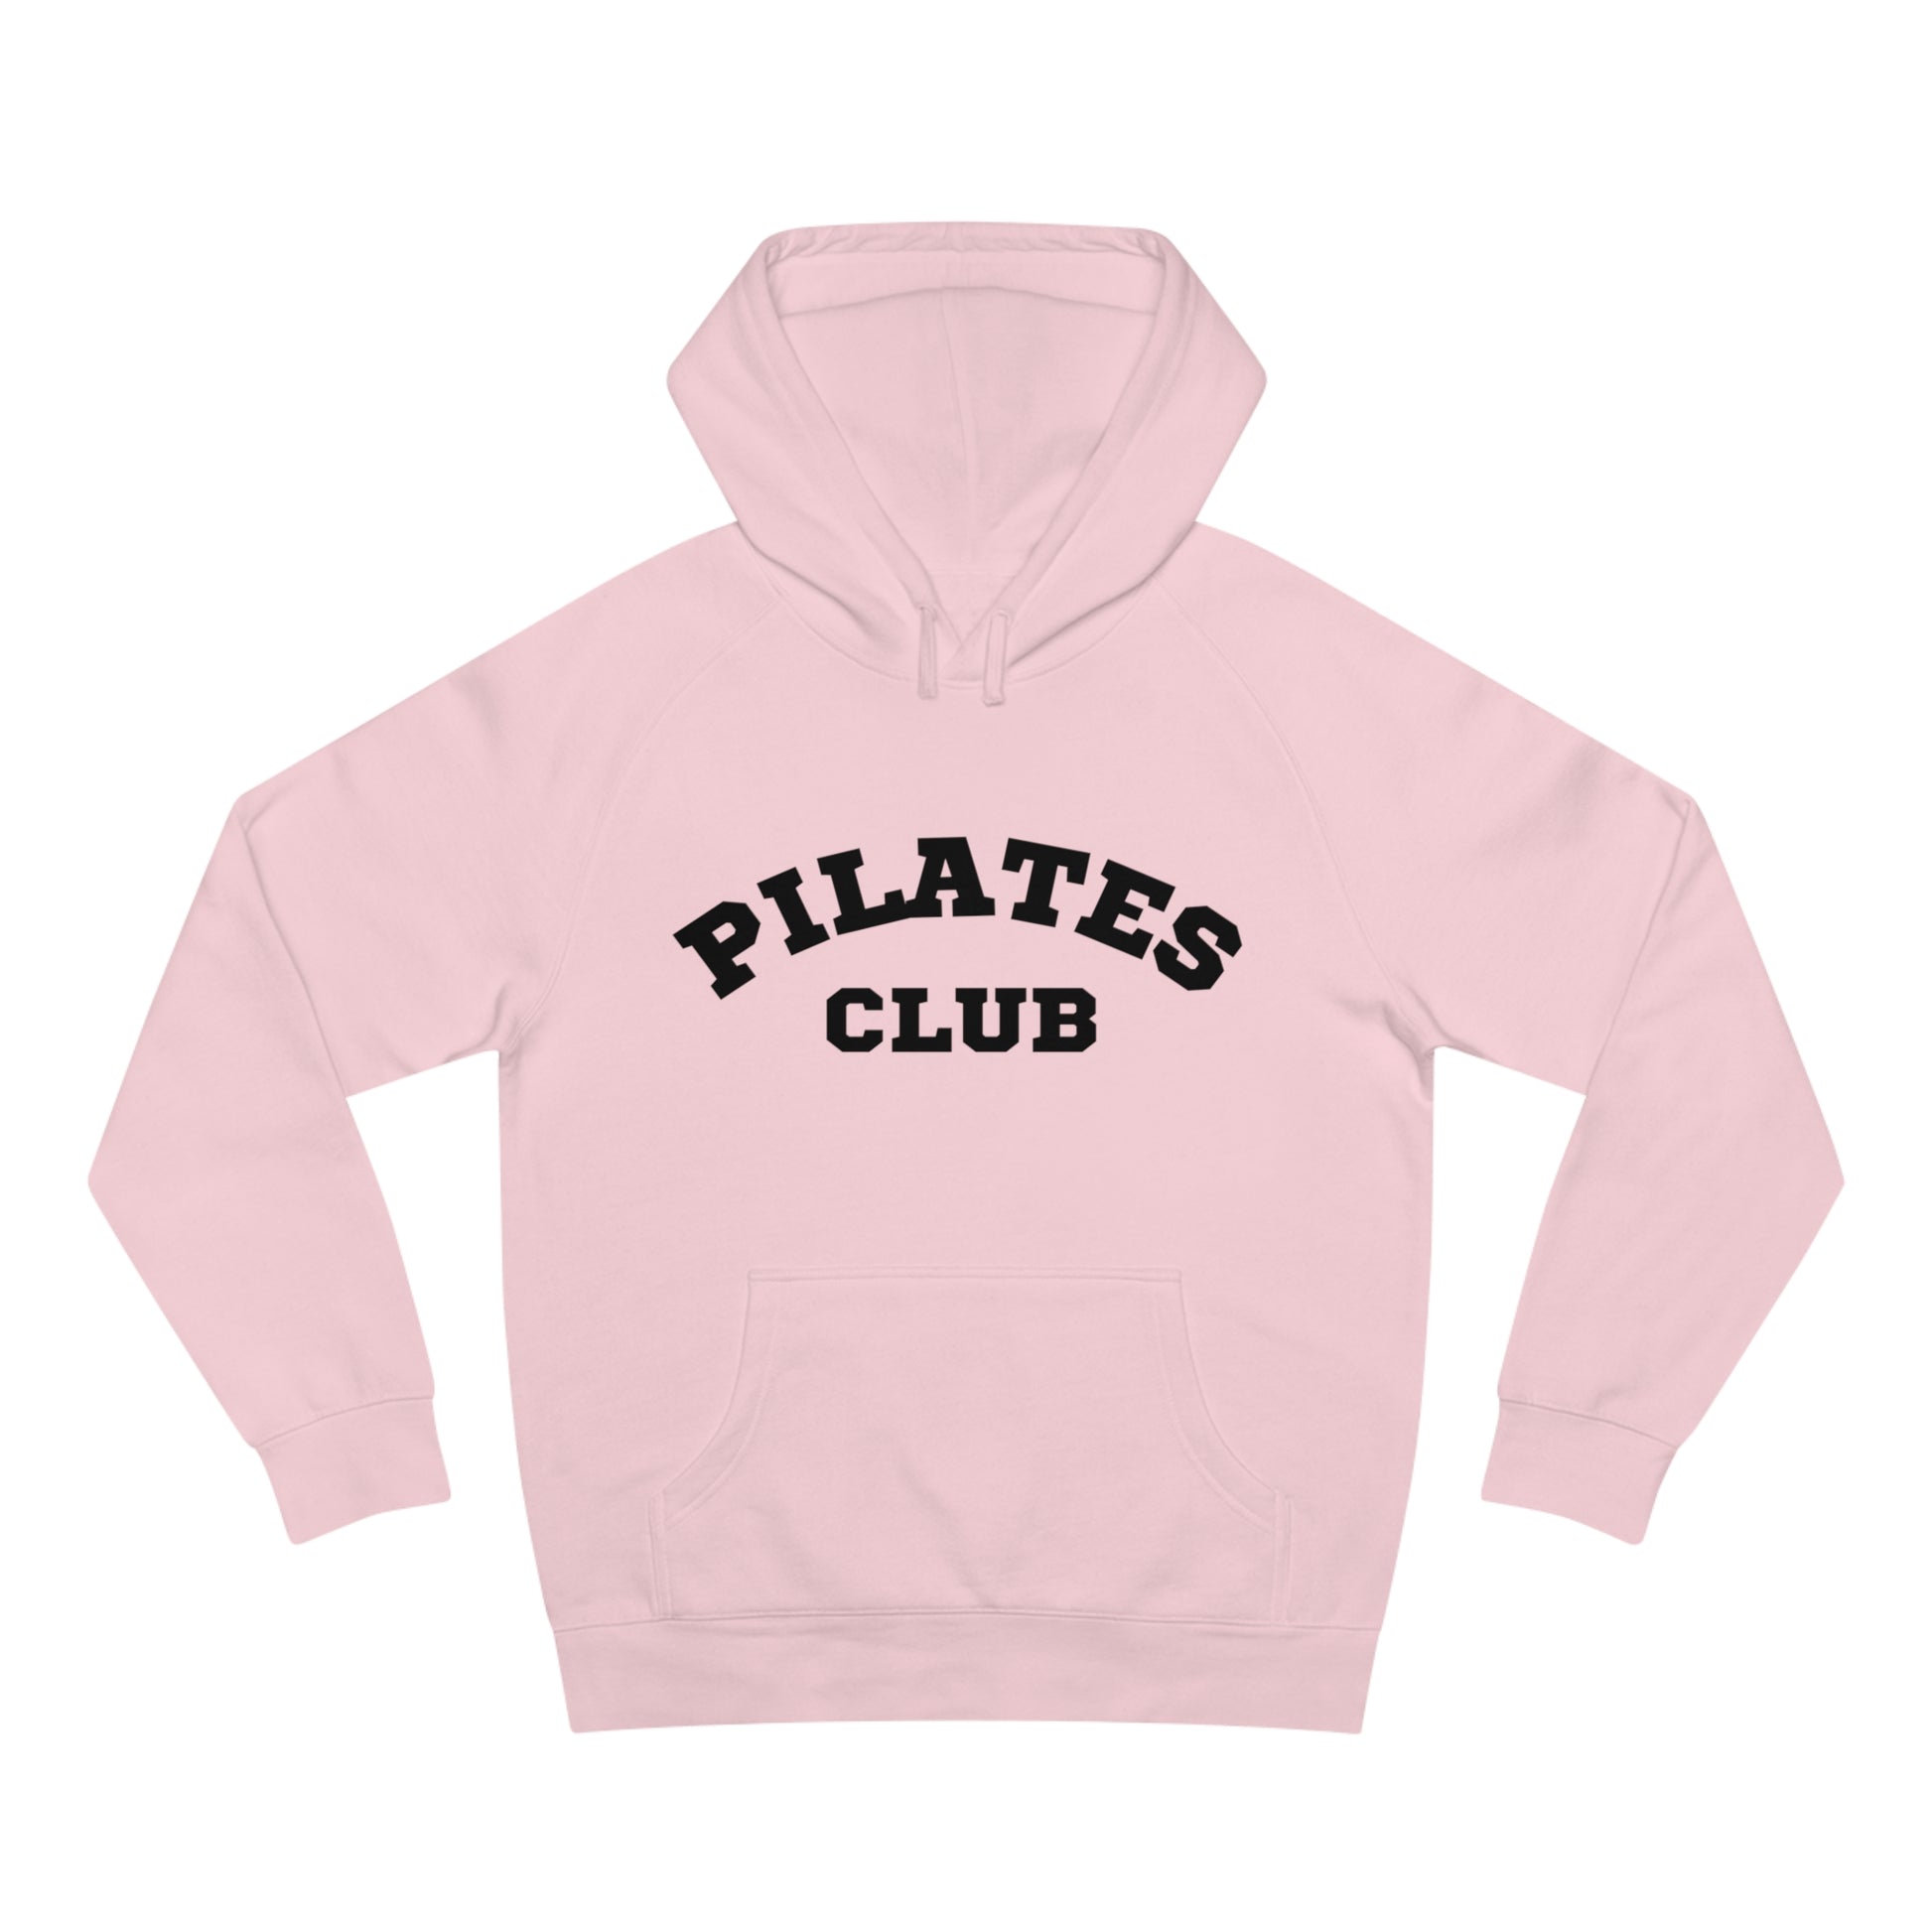 Pilates Club Pink Hoodies